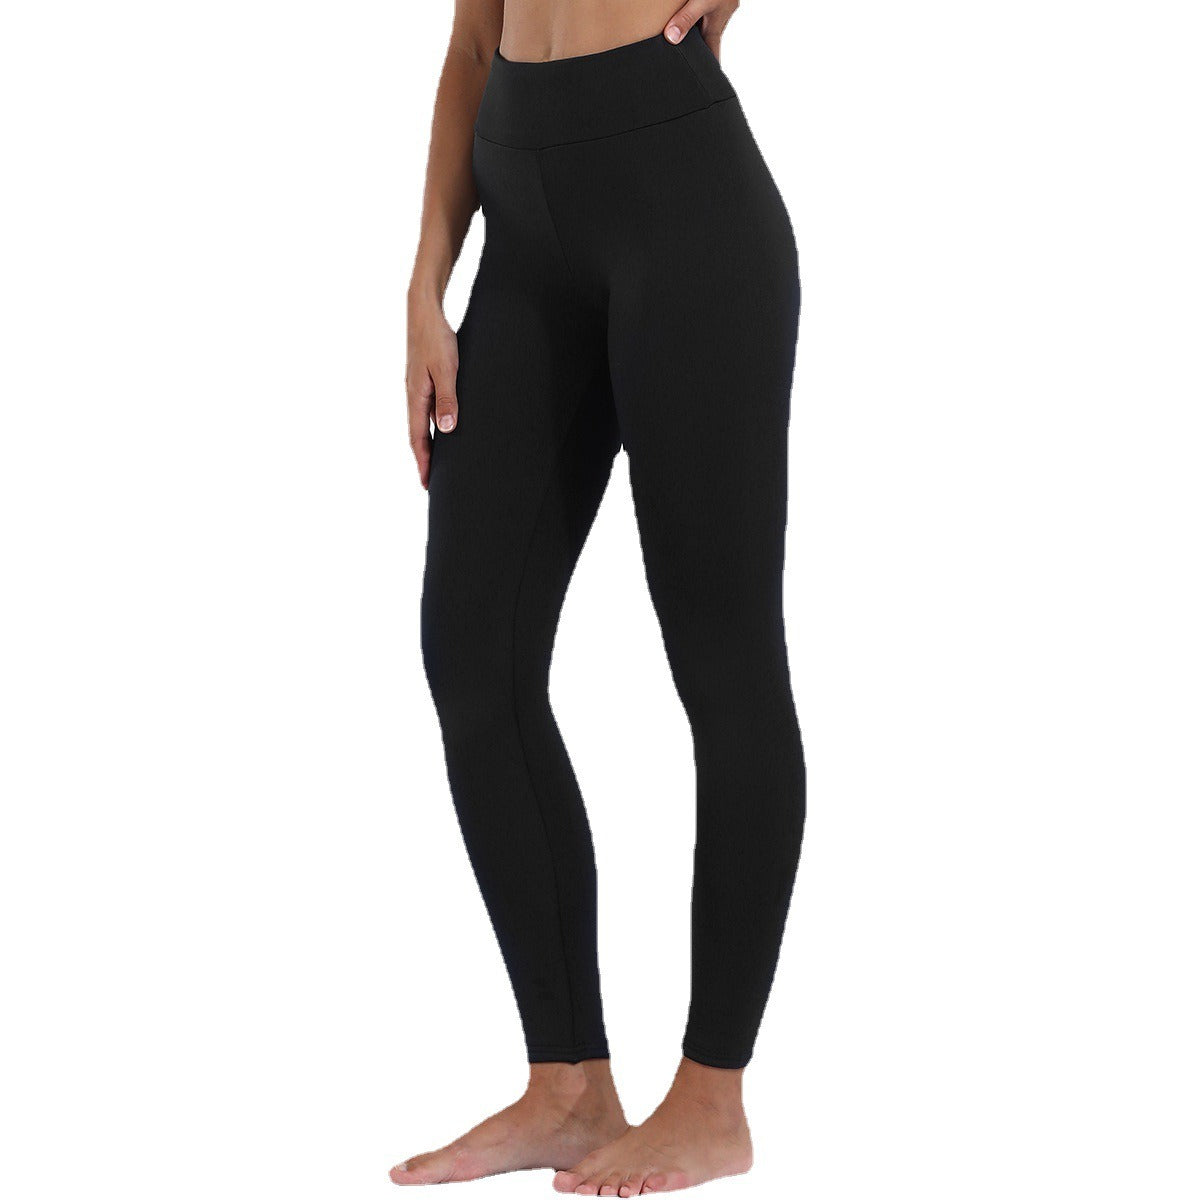 Large Size Plus Velvet Tight Thermal Pants - runwayfashionista.com